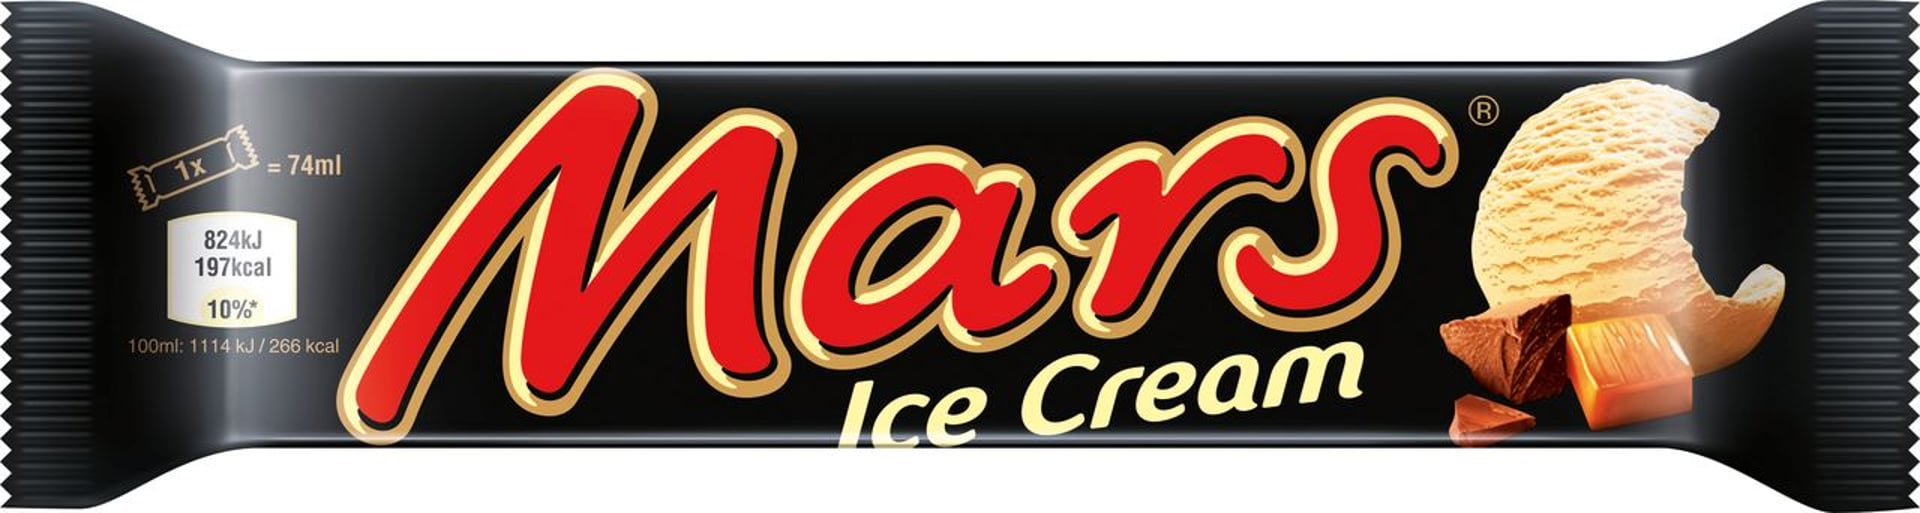 Snickers - Mars Ice Cream tiefgefroren - 24 x 74 ml Kiste